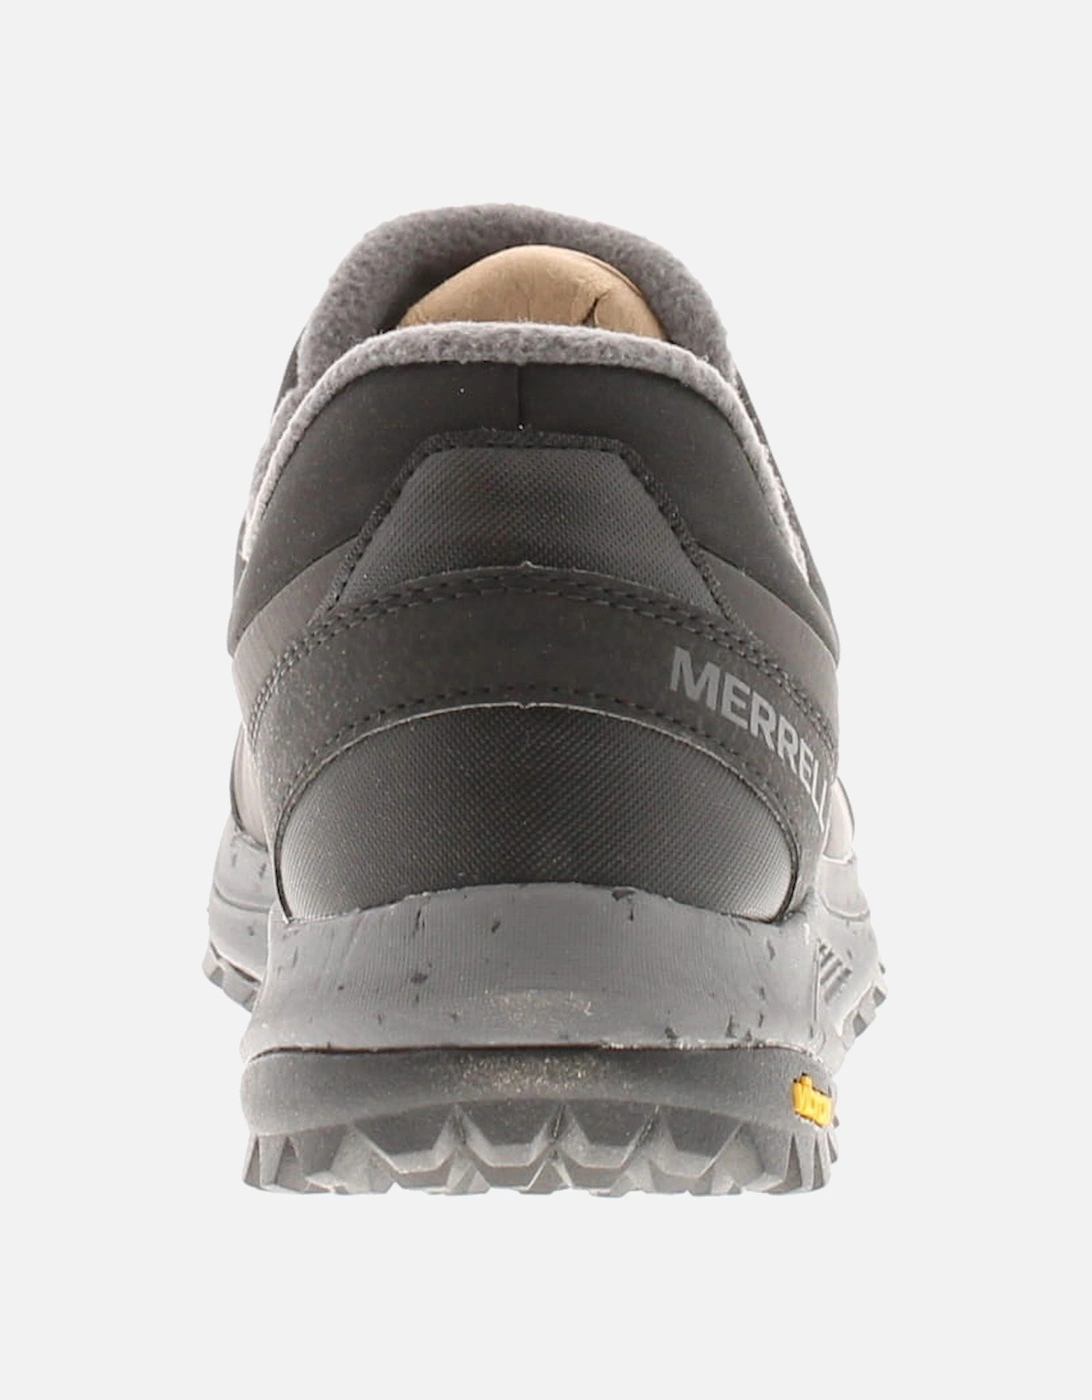 Mens Walking Boots Nova Sneaker Moc Slip On black UK Size